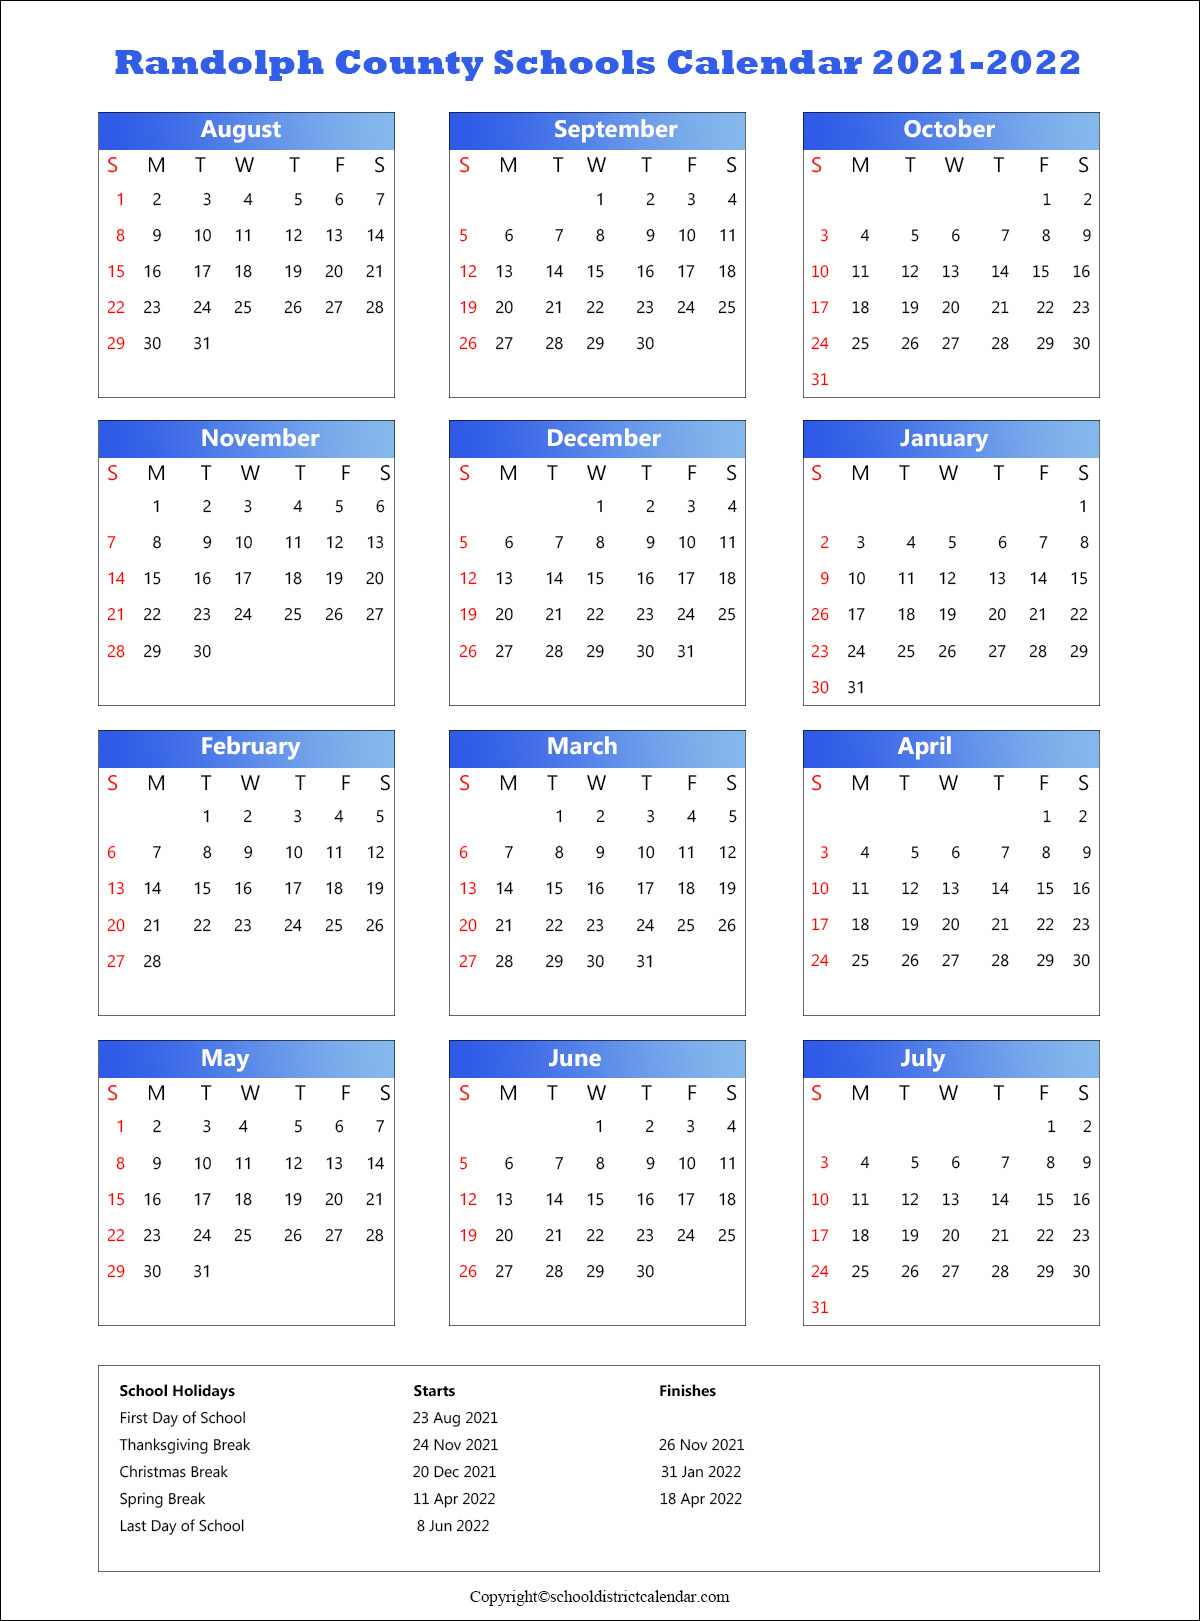 Randolph County Schools Calendar, Asheboro Holidays 2021